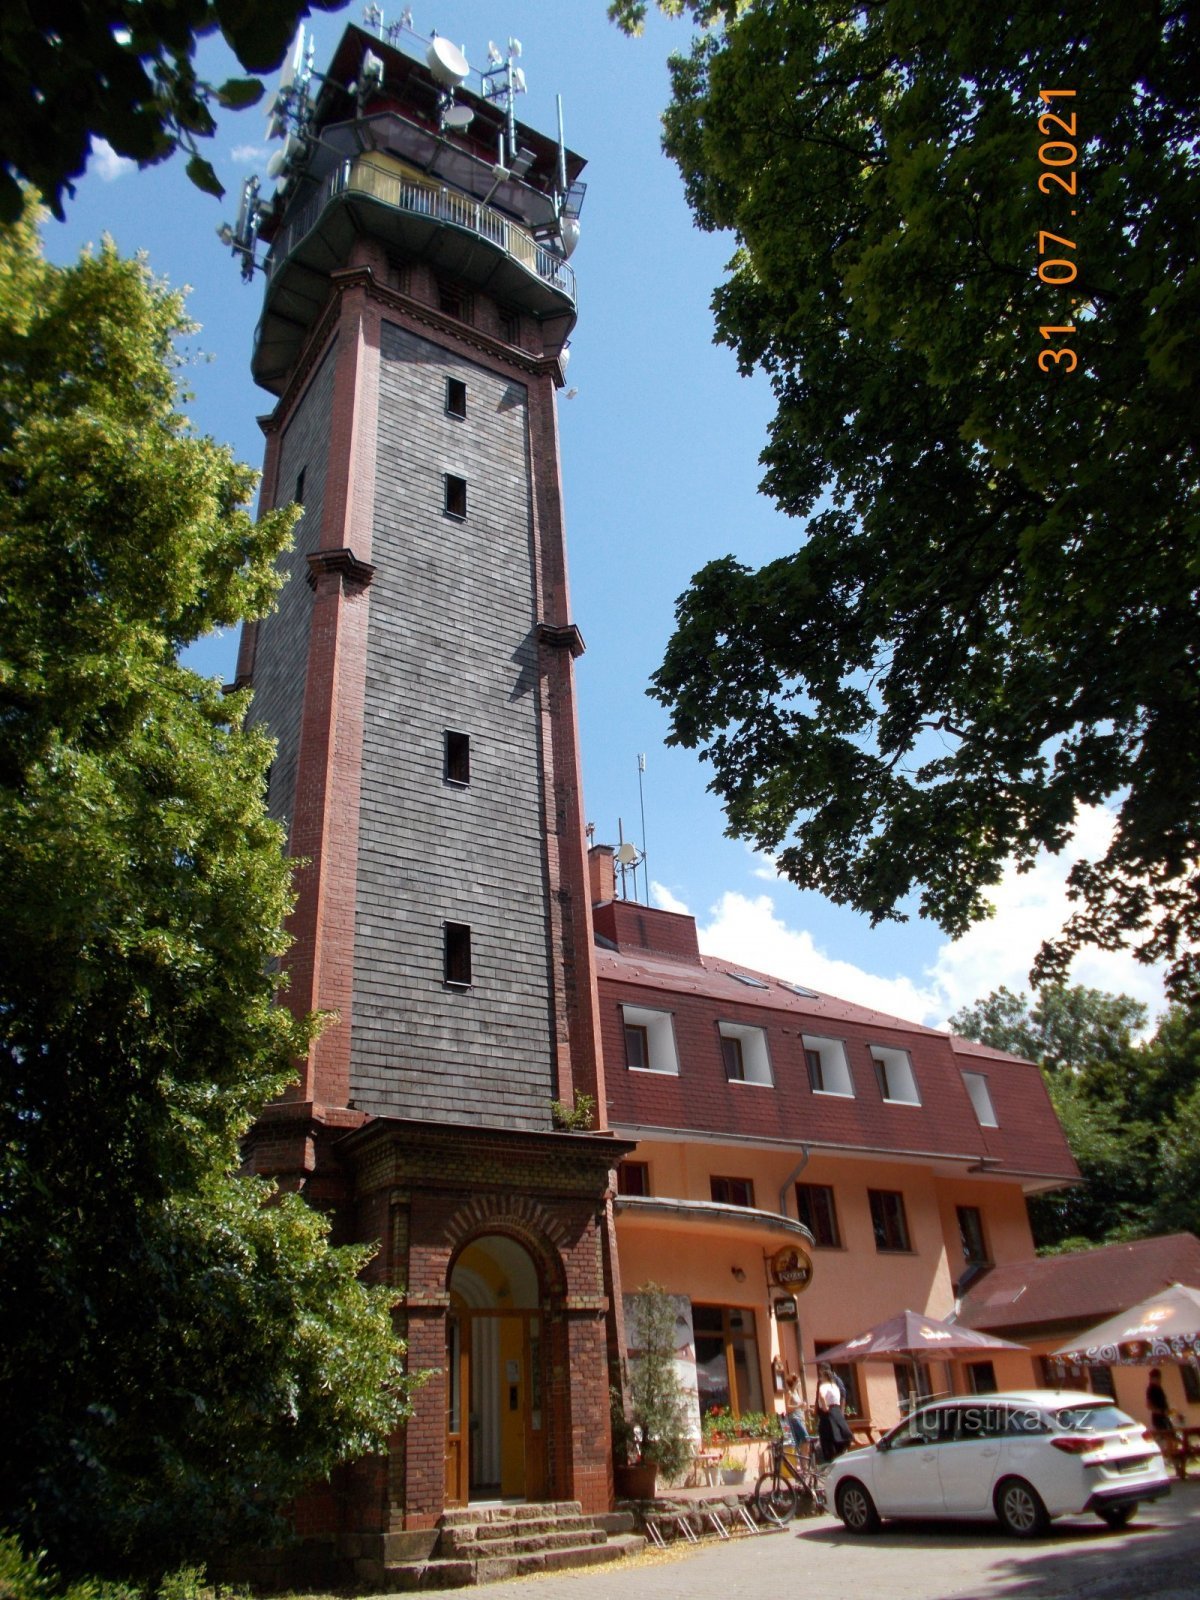 Torre di avvistamento Tichánka